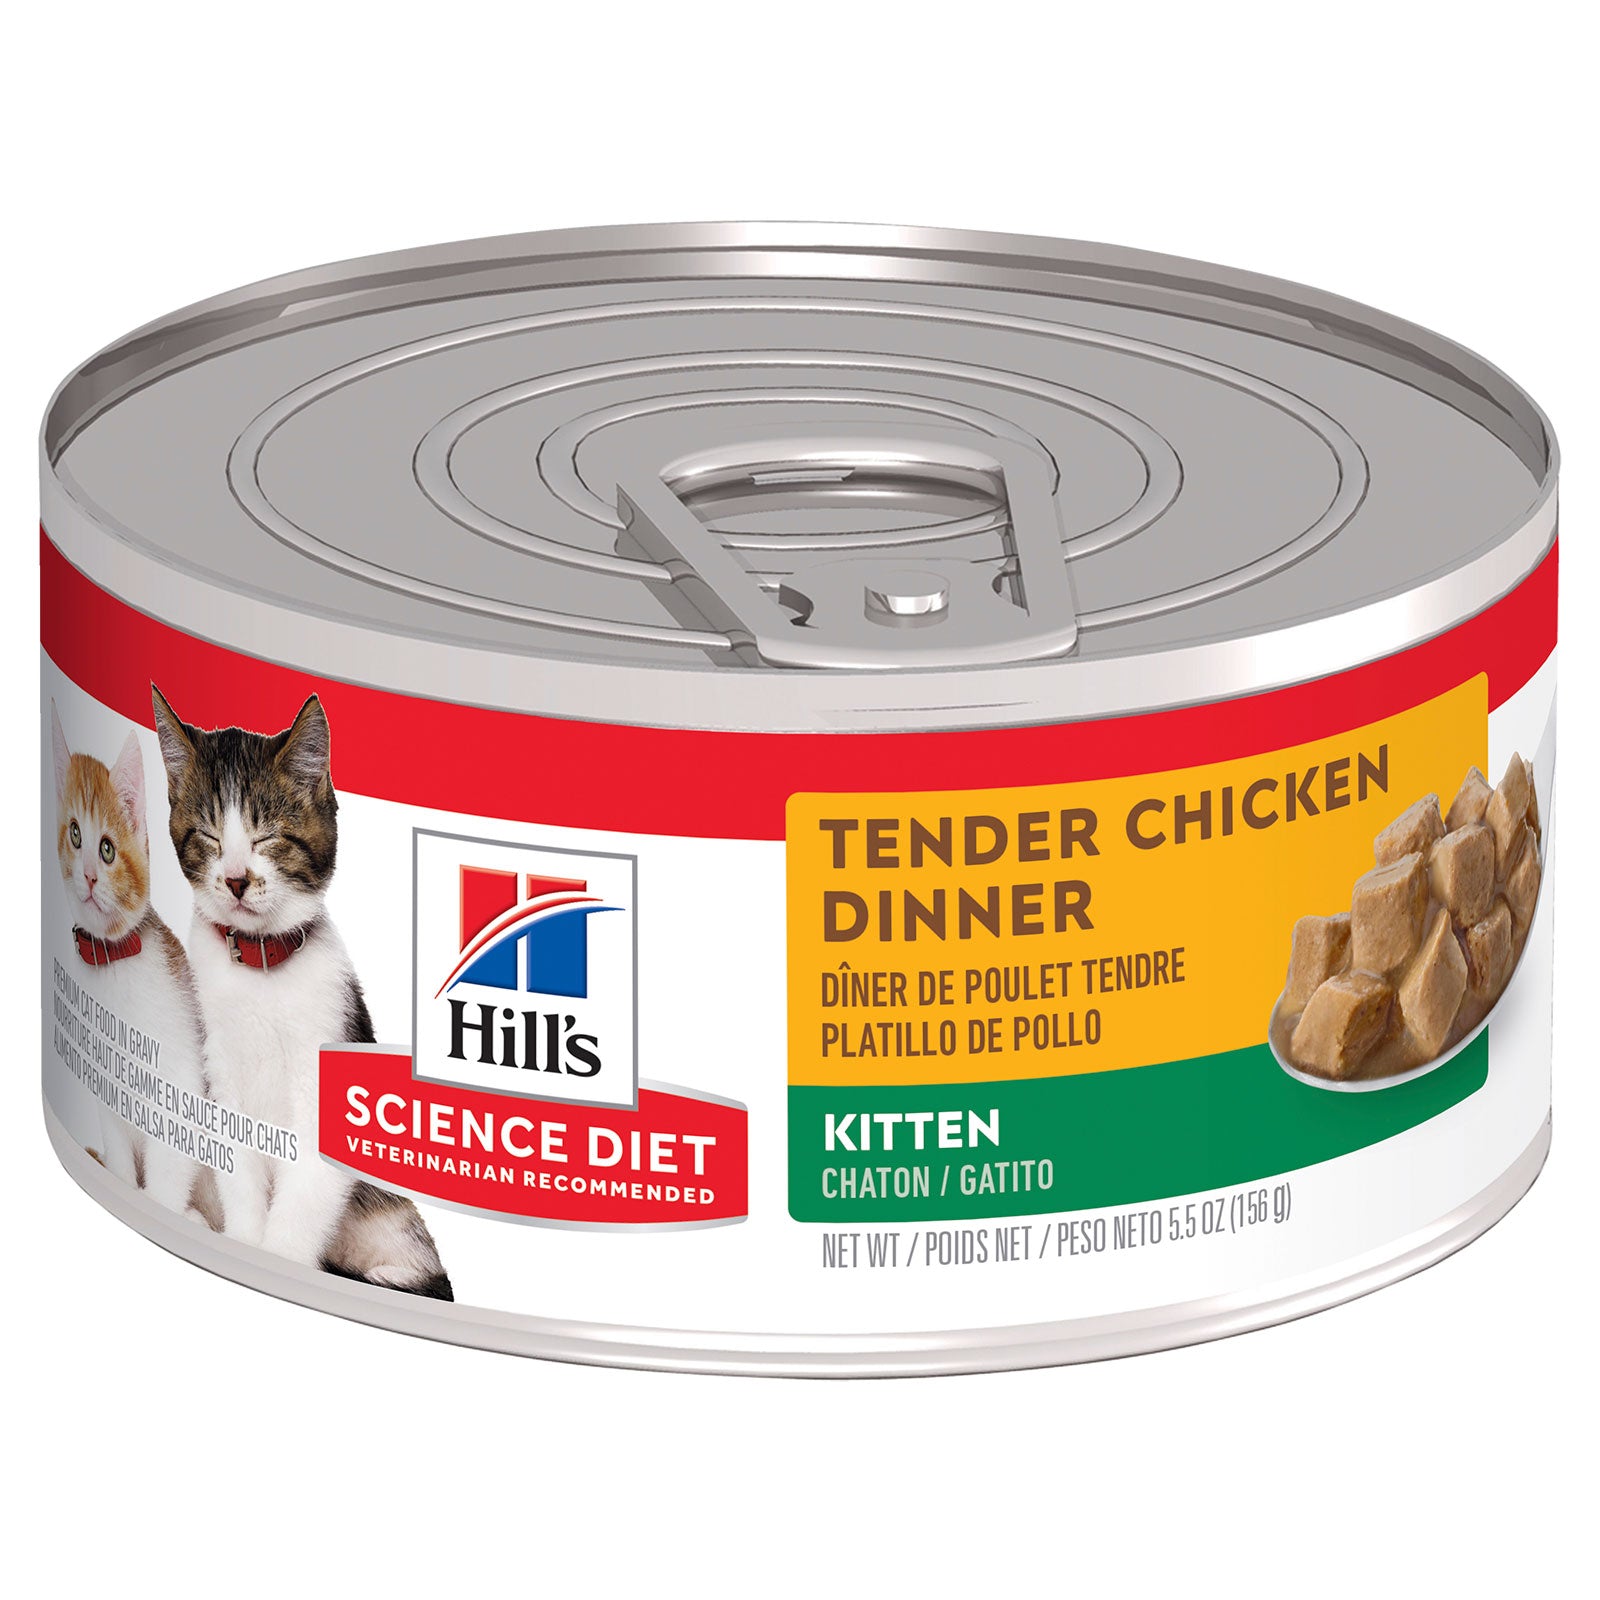 Hill's Science Diet Cat Food Can Kitten Tender Chicken Dinner